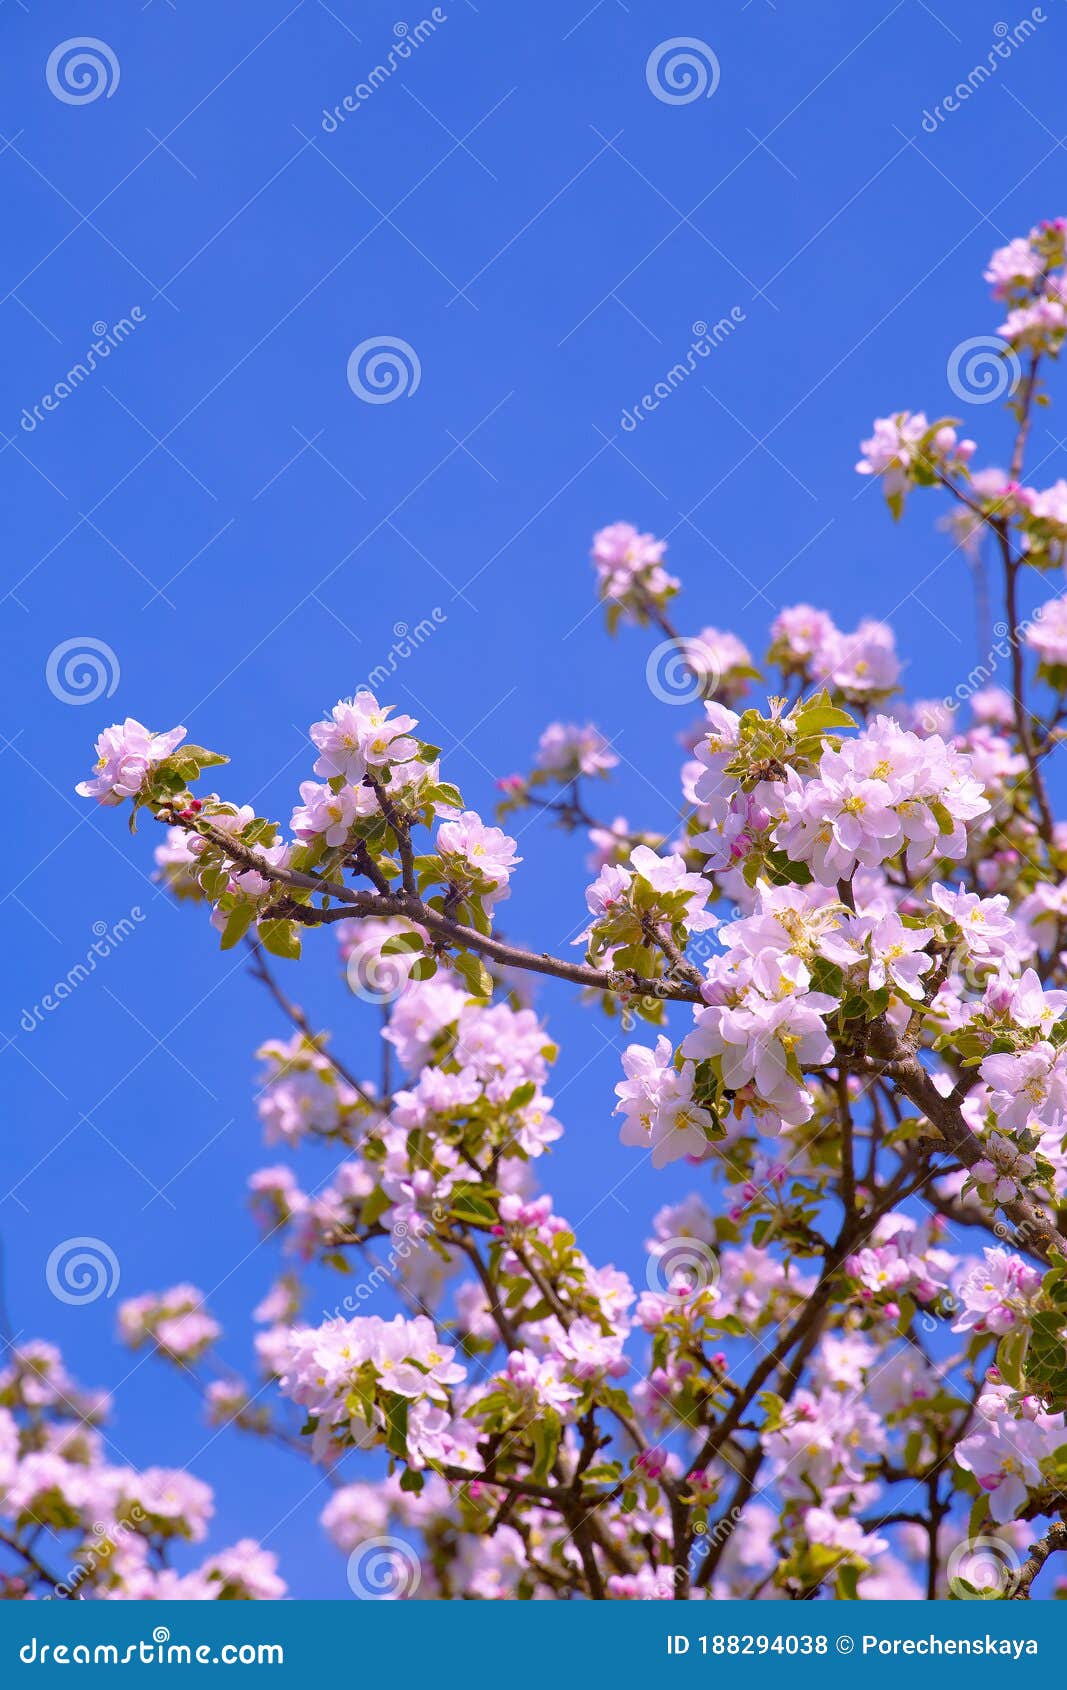 Aesthetics Fashion Spring Wallpaper Apple Flowers Blossom Tree Stock Photo Image Of Pink Europe